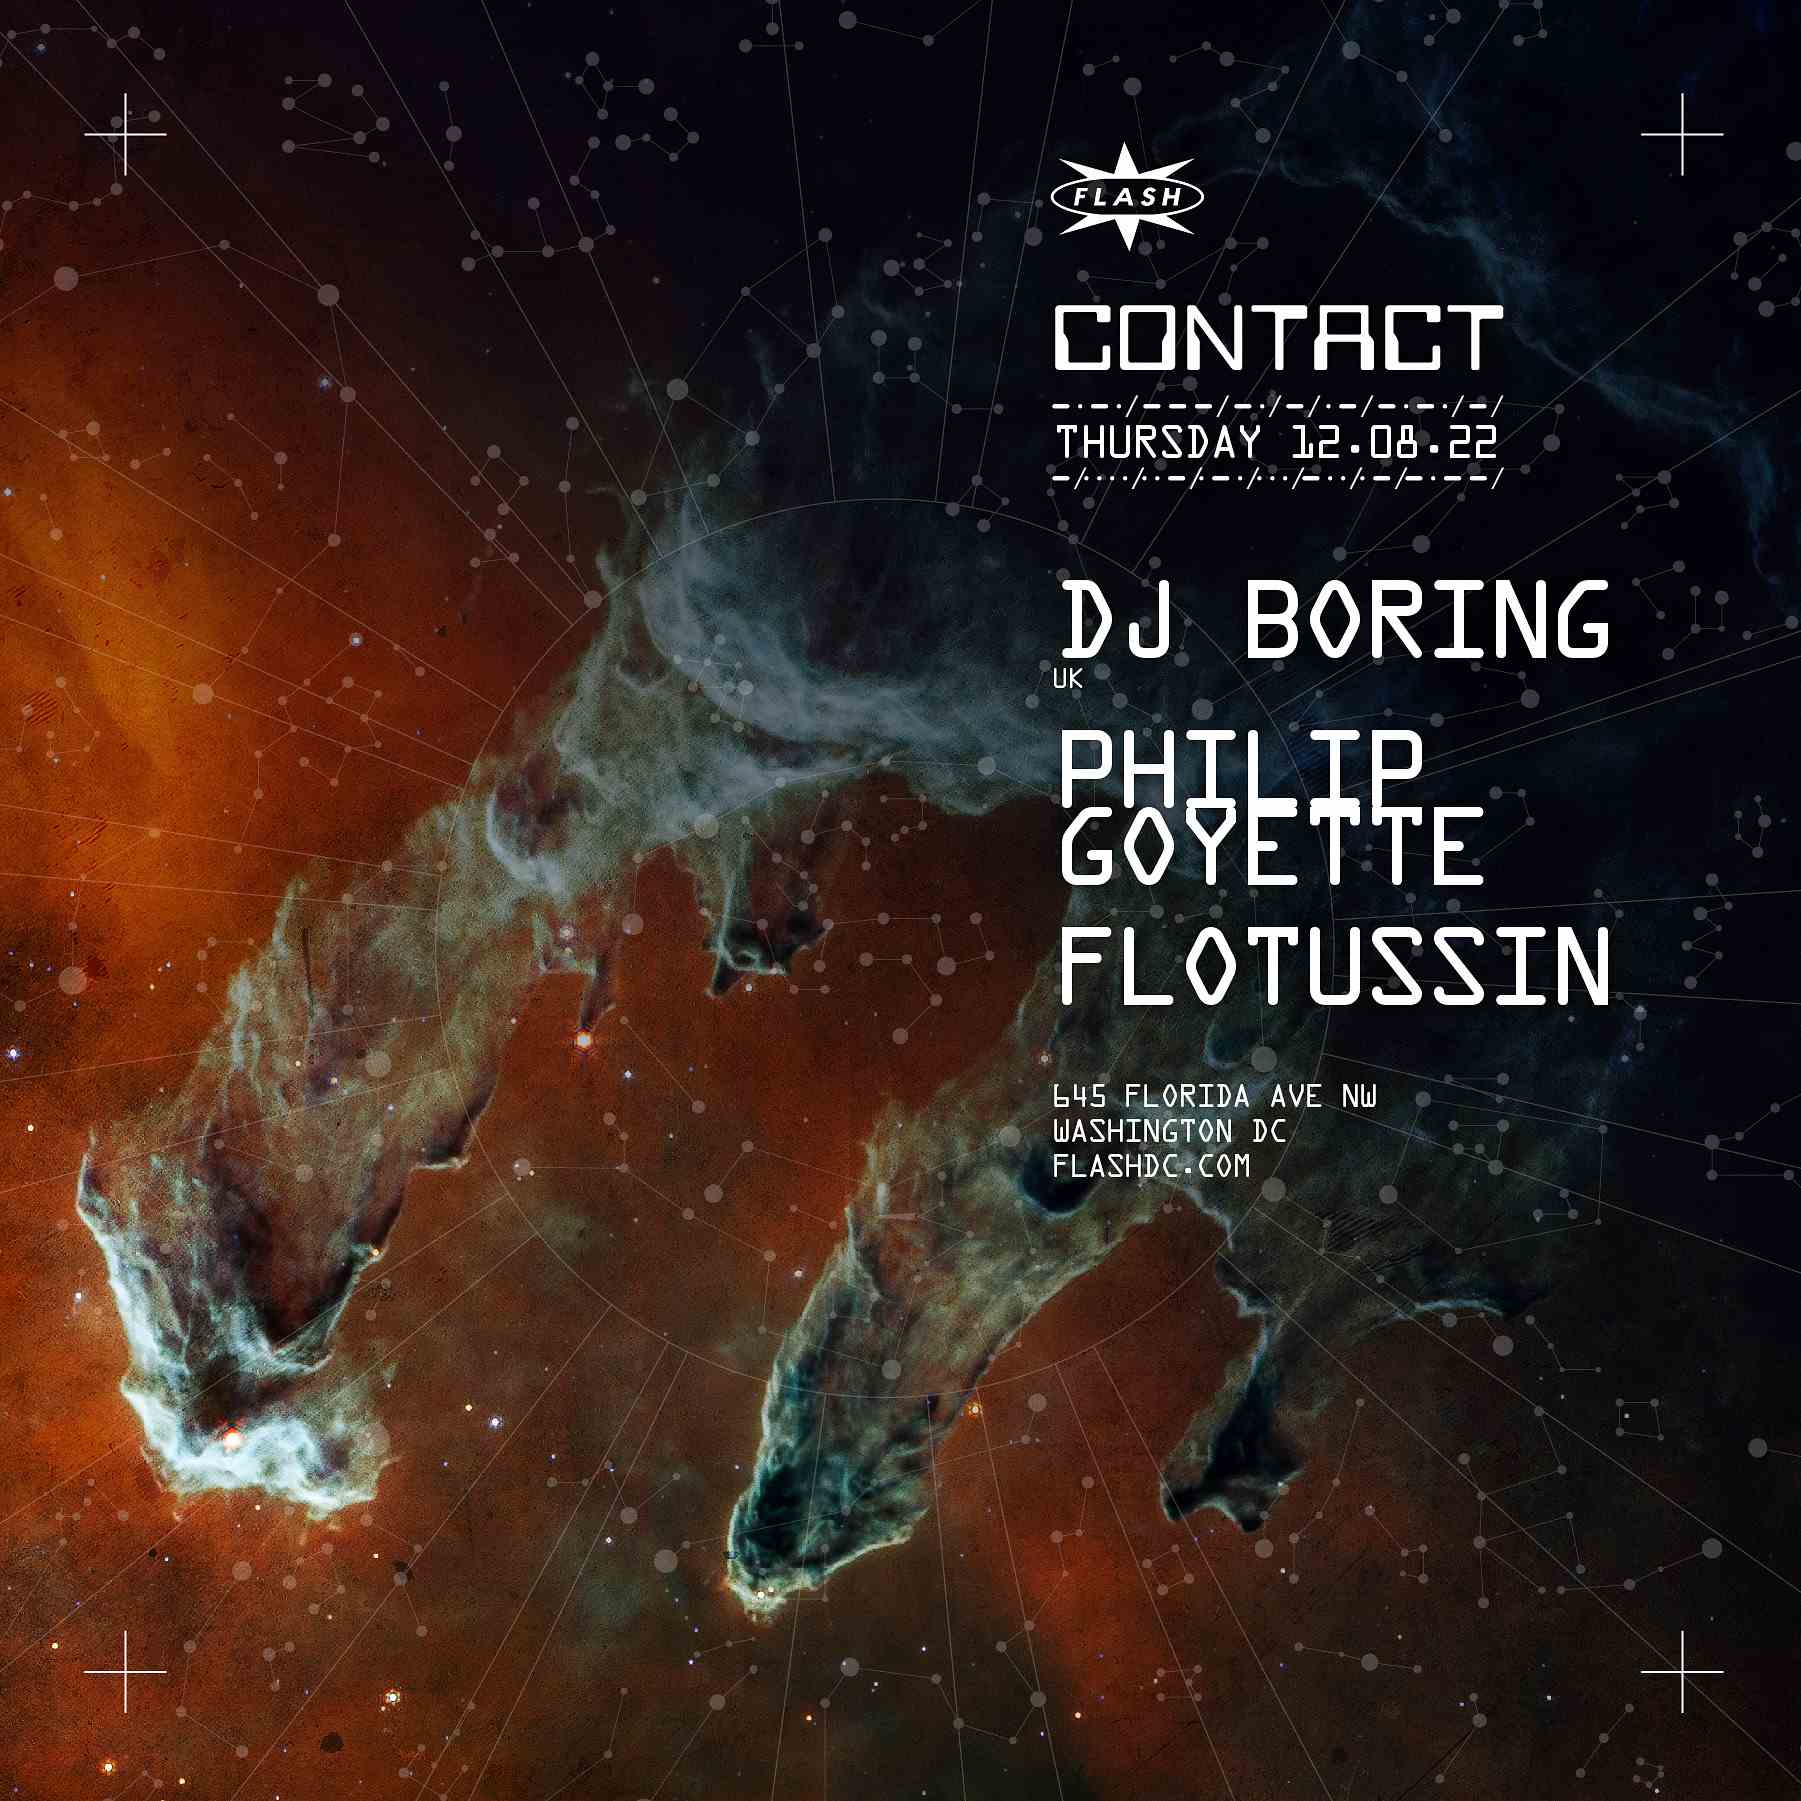 CONTACT: DJ Boring - Philip Goyette - Flotussin event thumbnail